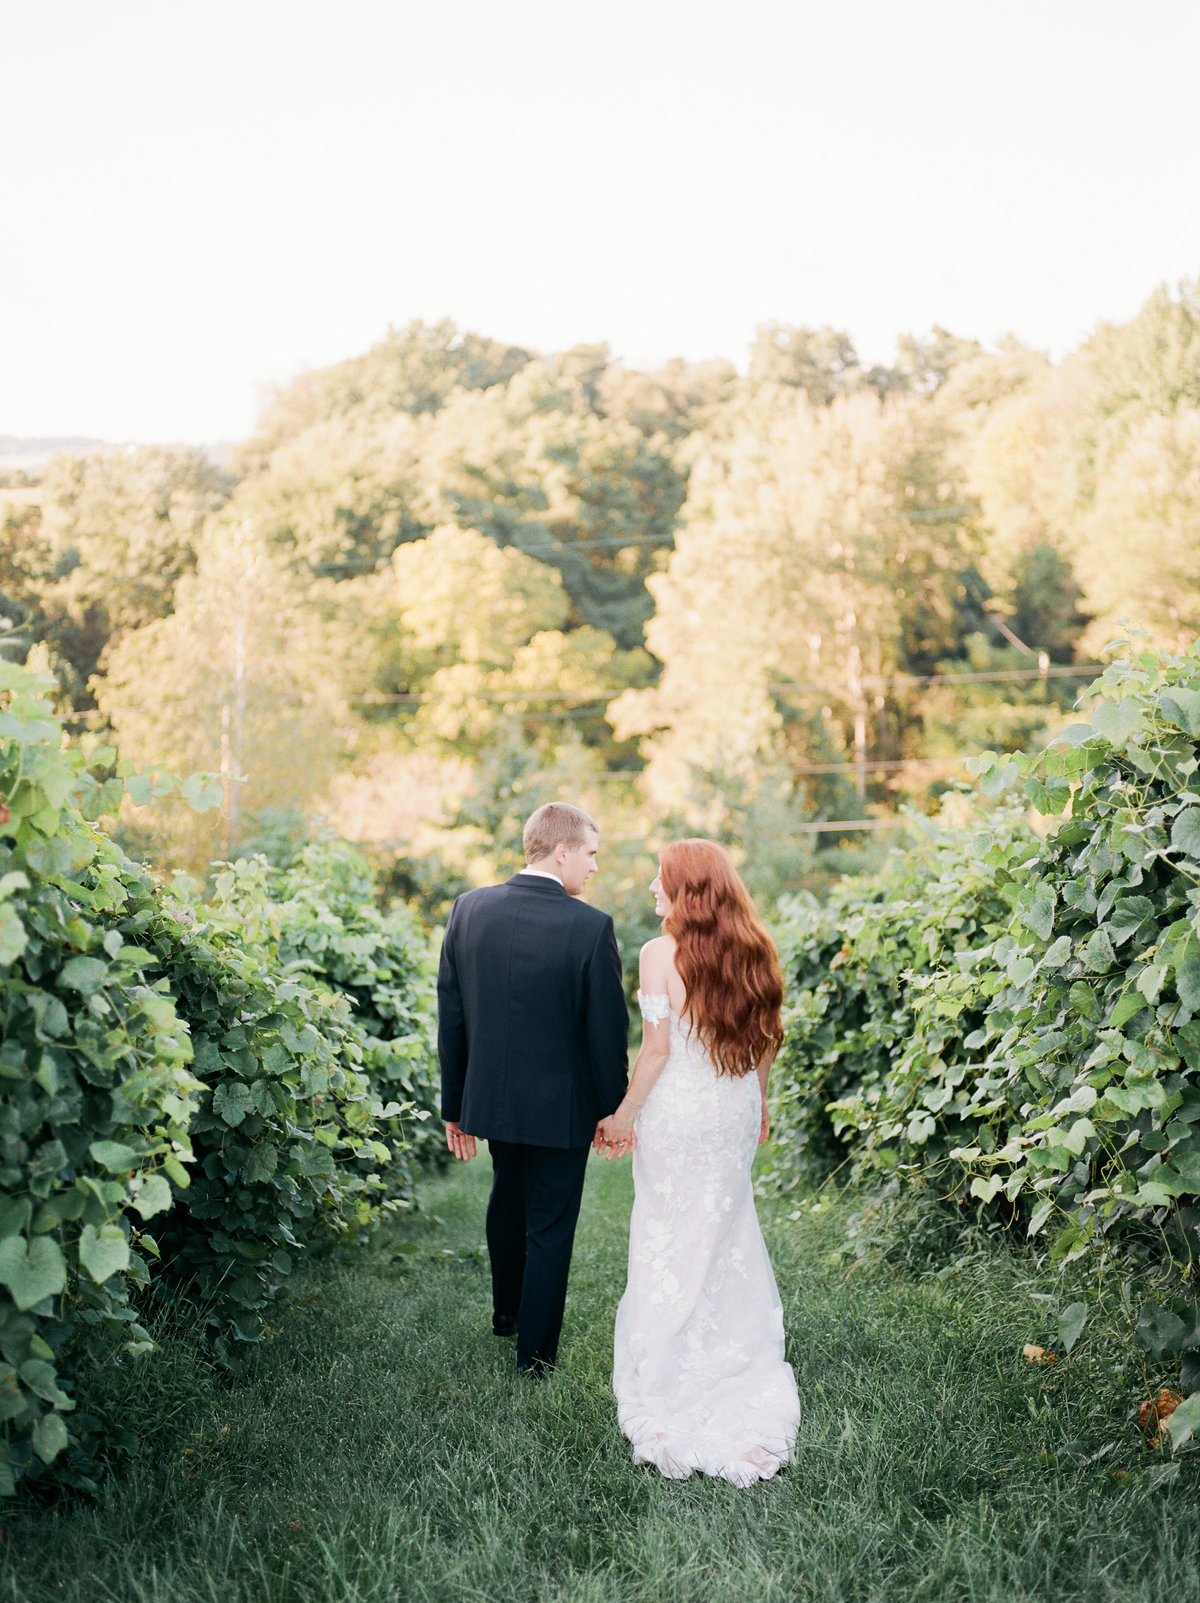 couple wearing wedding attire walking through green grass